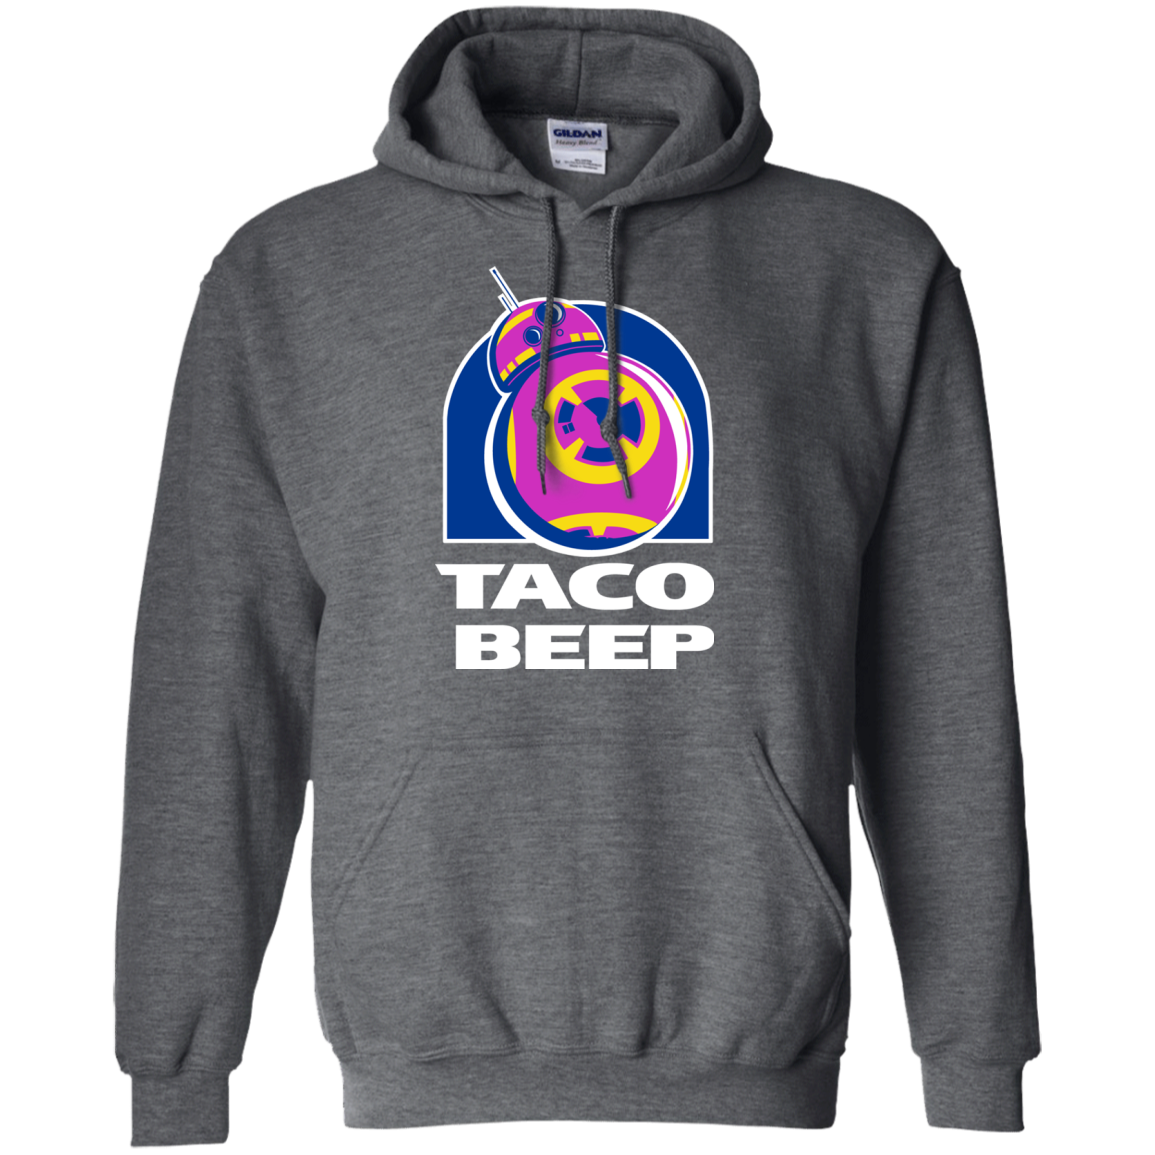 Taco Beep Pullover Hoodie